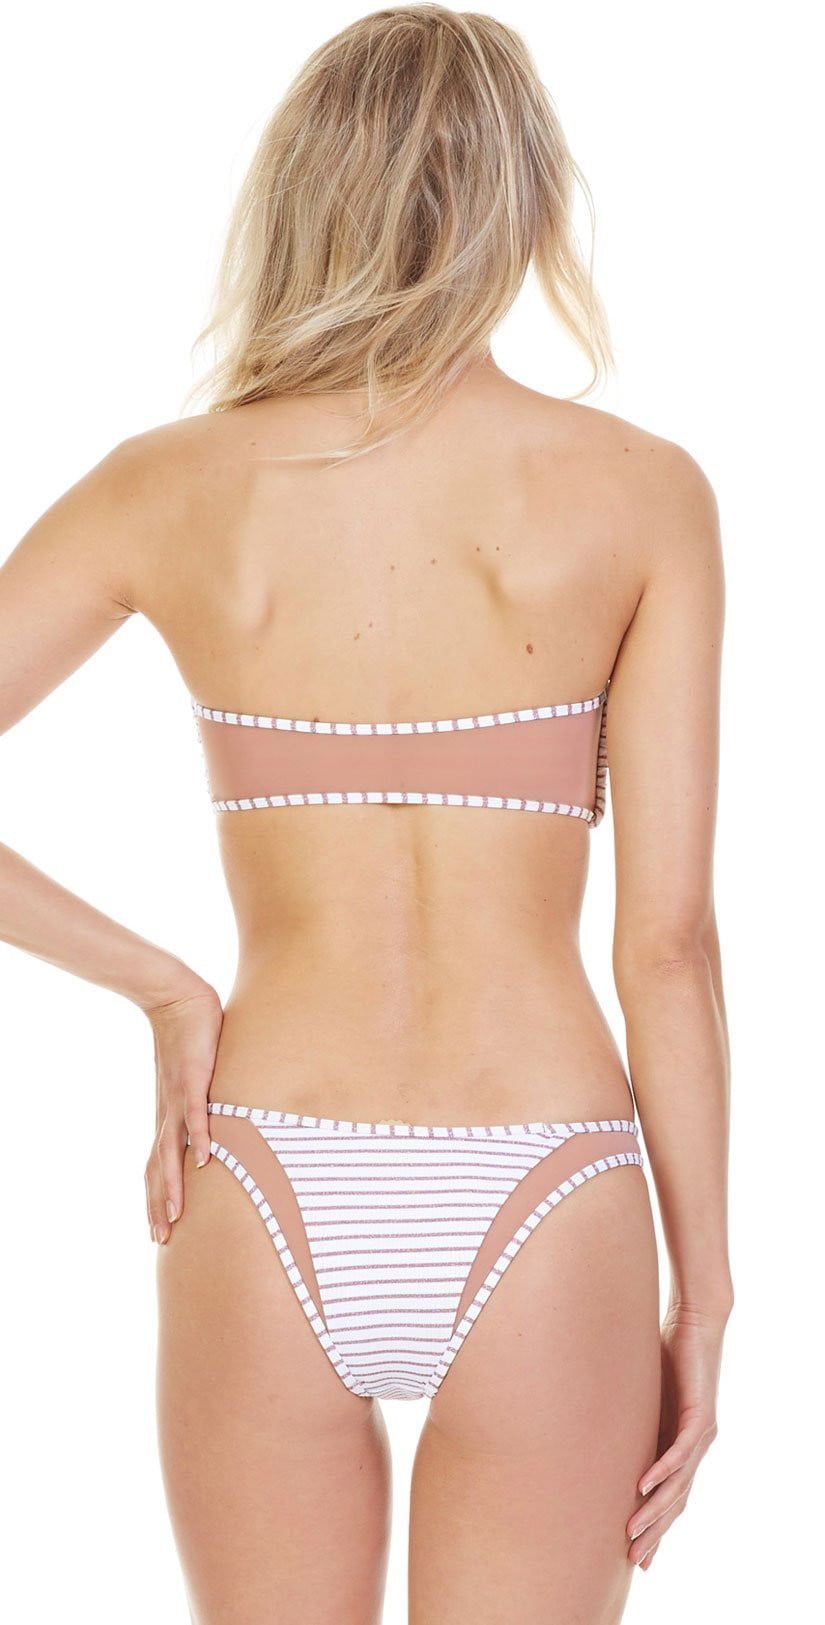 South Beach Swimsuits Tori Praver Royale Fine Rib Bikini Top